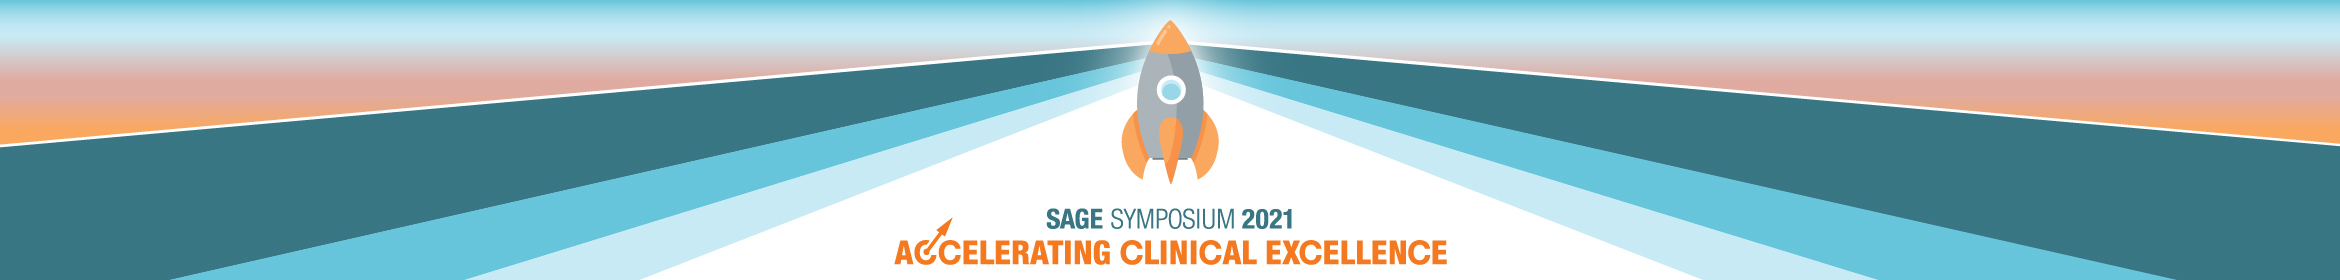 SAGE Symposium 2021 Main banner